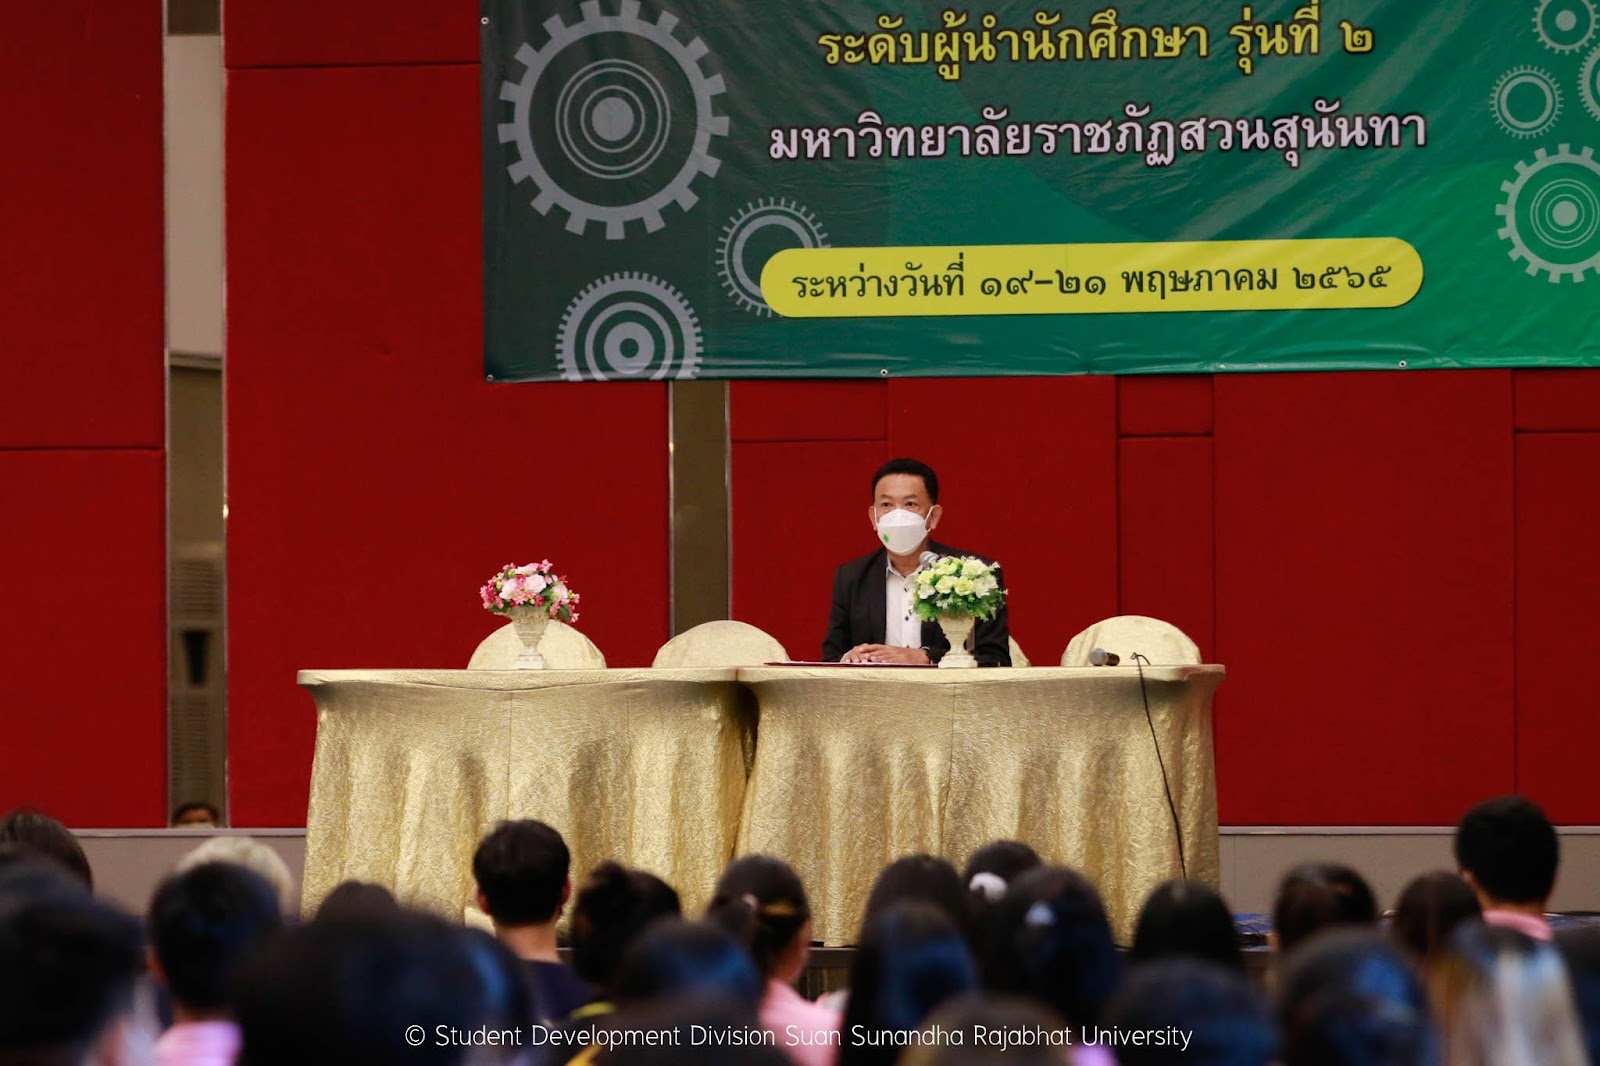 Leader of Social Engineers” Suan Sunandha Rajabhat University